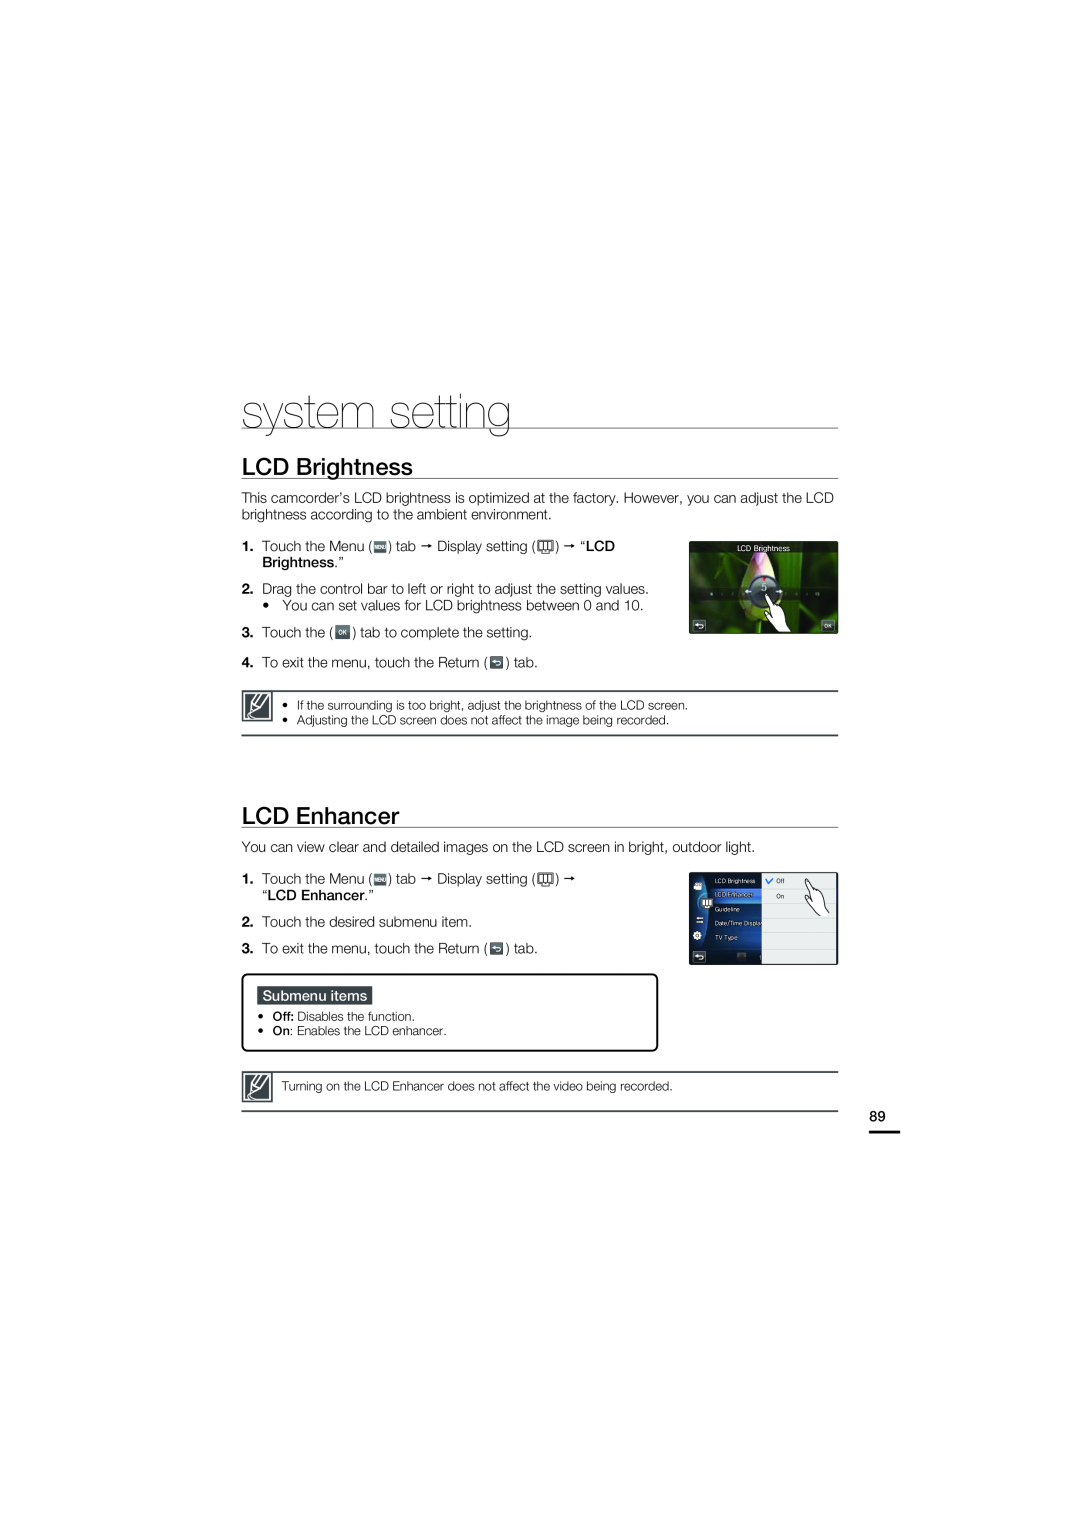 Samsung HMX-S10BN/XAA, HMX-S15BN/XAA manual system setting, LCD Brightness, LCD Enhancer, Submenu items 